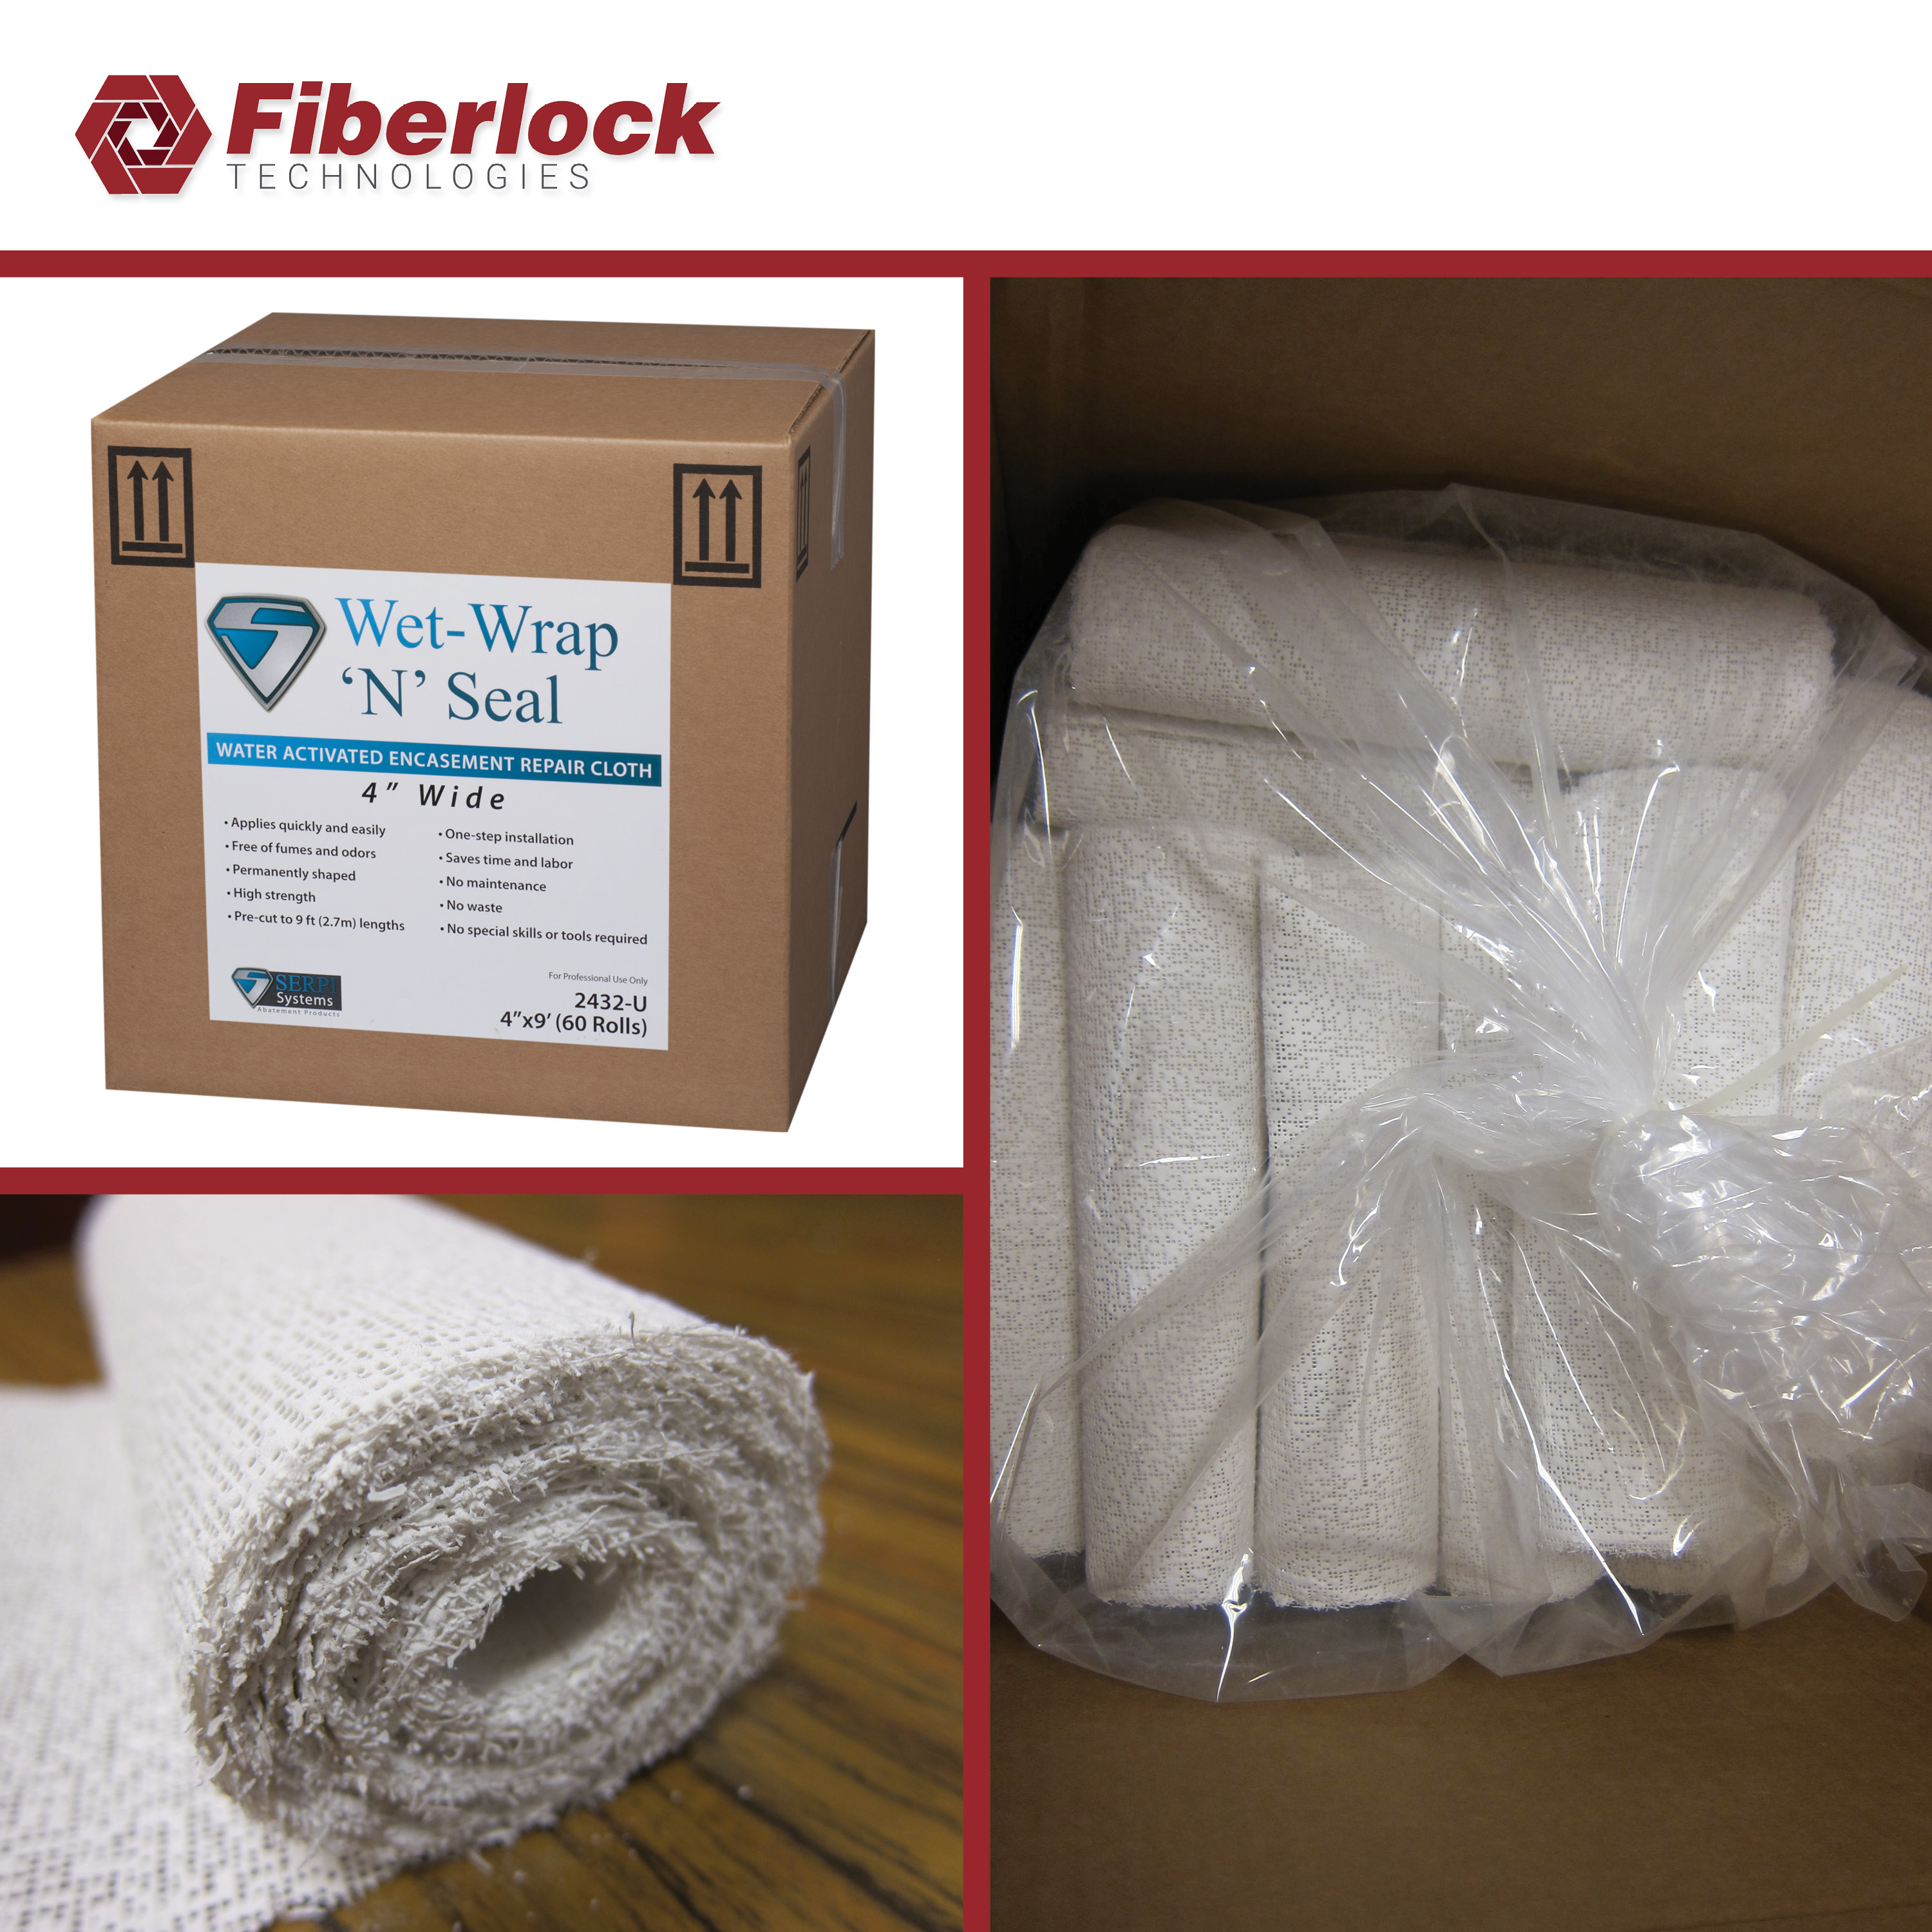 Asbestos Repair Cloth - SERPI Lagging Cloth Blanket (75 Sq. Ft